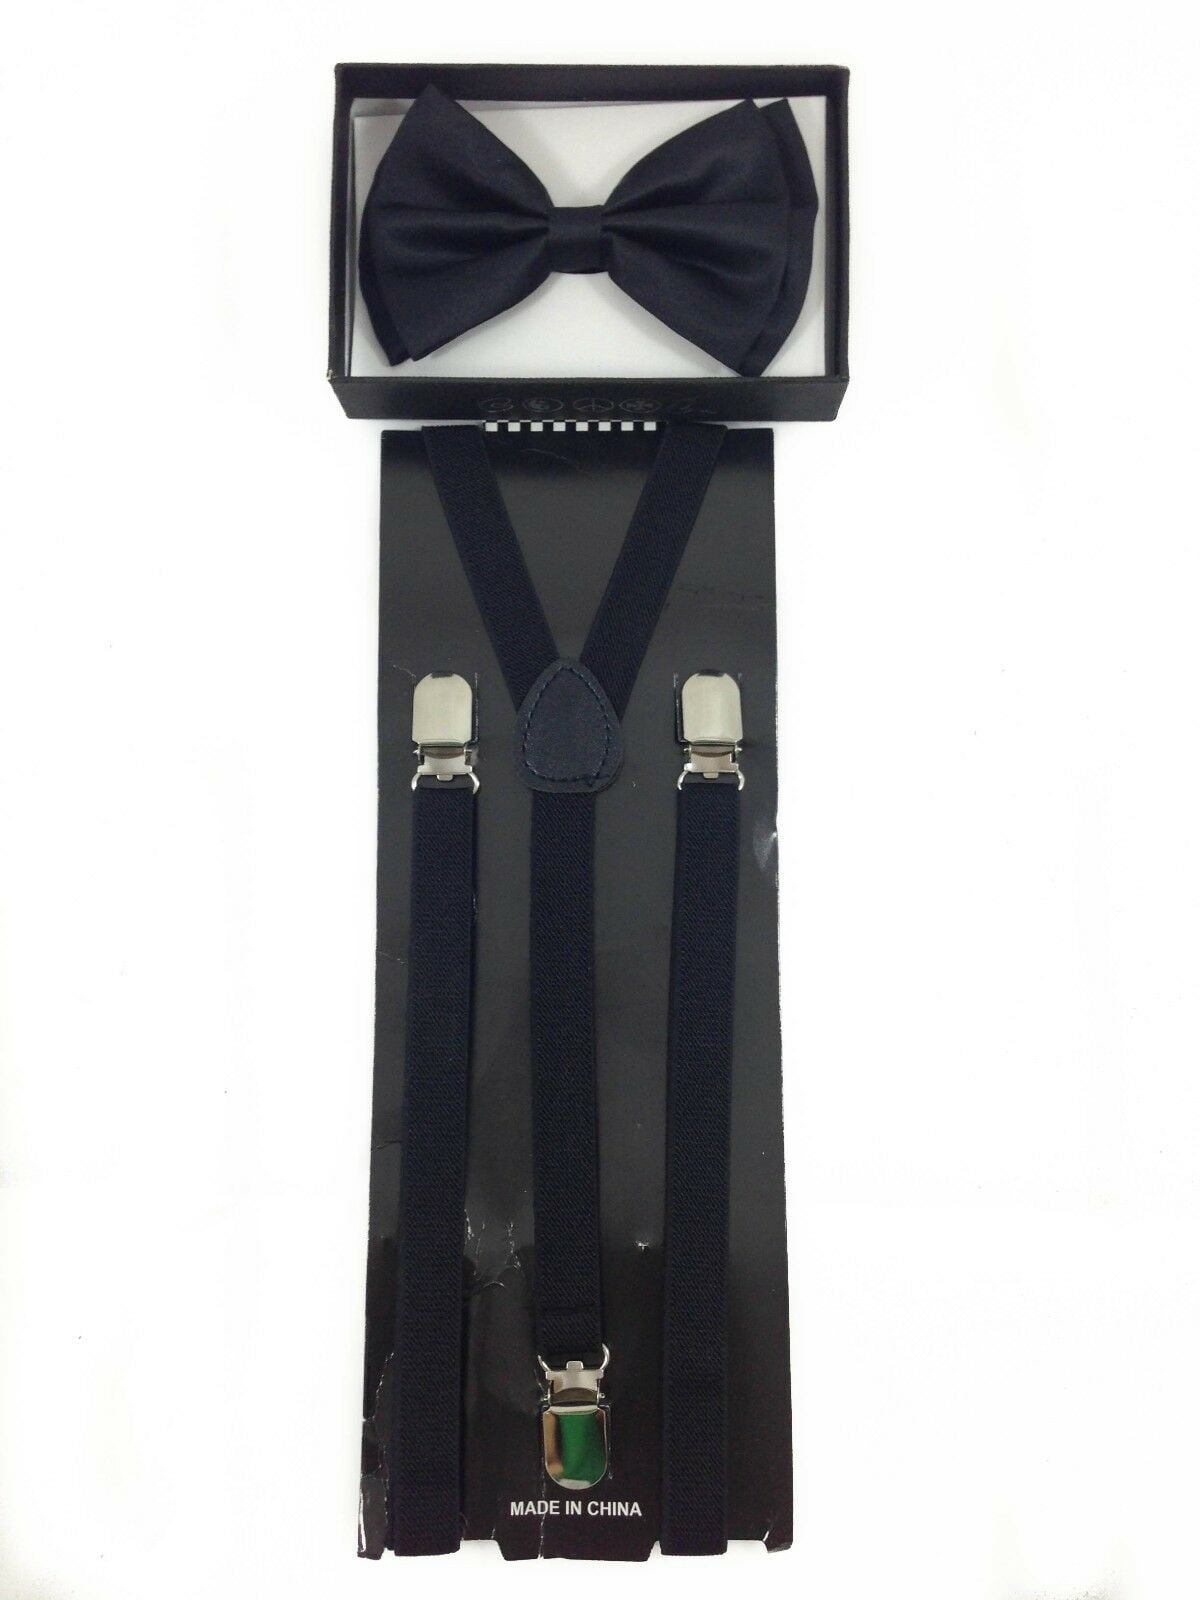 Womens Suspender Bow Tie Set Y Shape Adjustable Rainbow Checker Flag Black